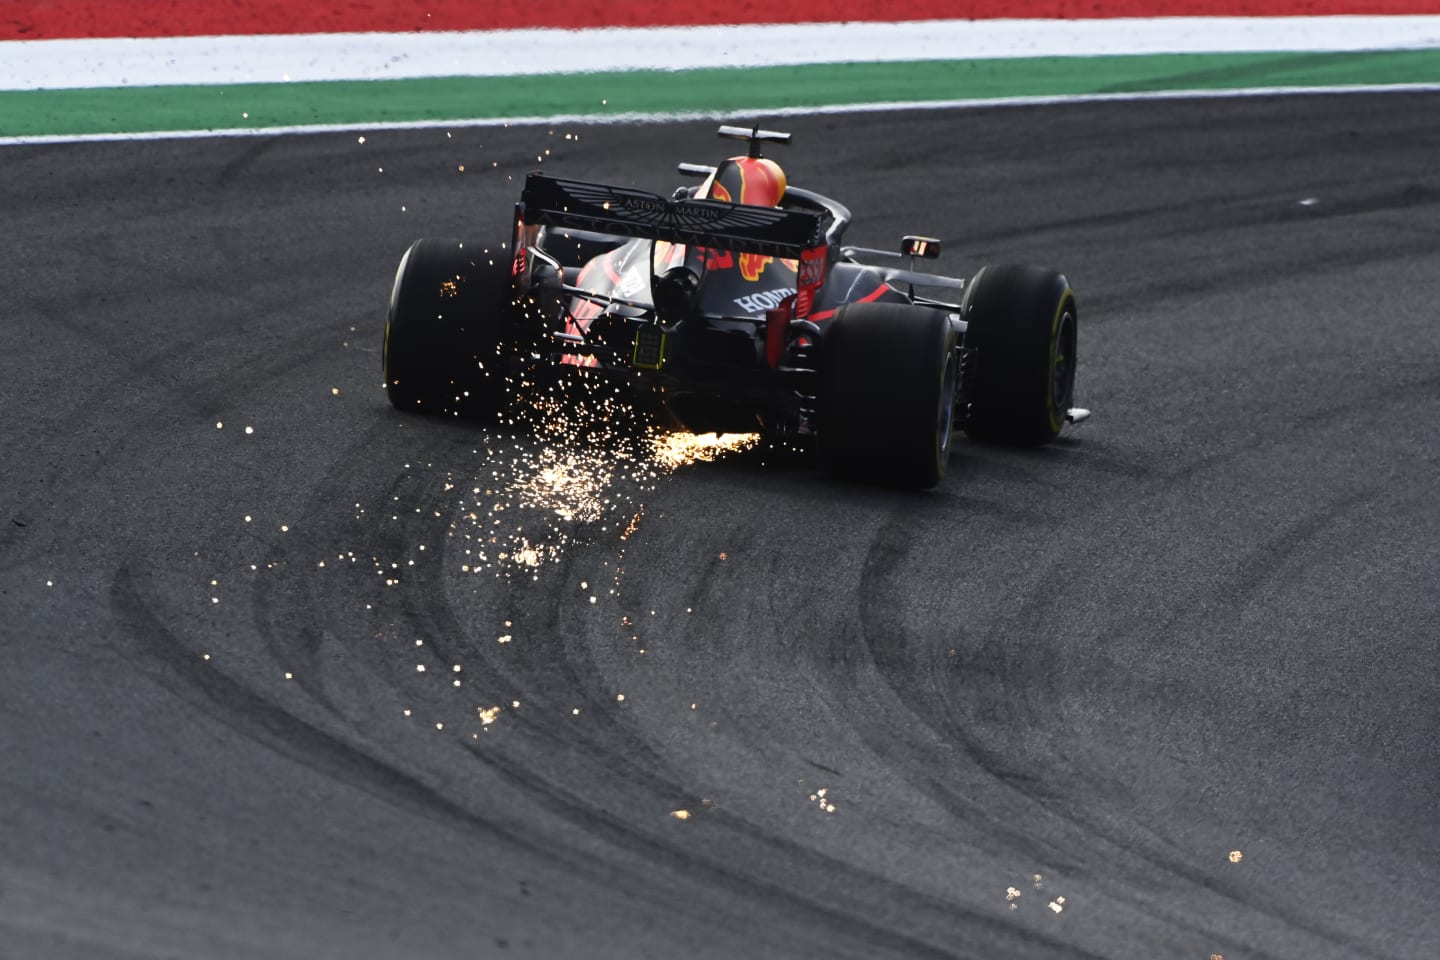 SCARPERIA, ITALY - SEPTEMBER 11: Max Verstappen of the Netherlands driving the (33) Aston Martin